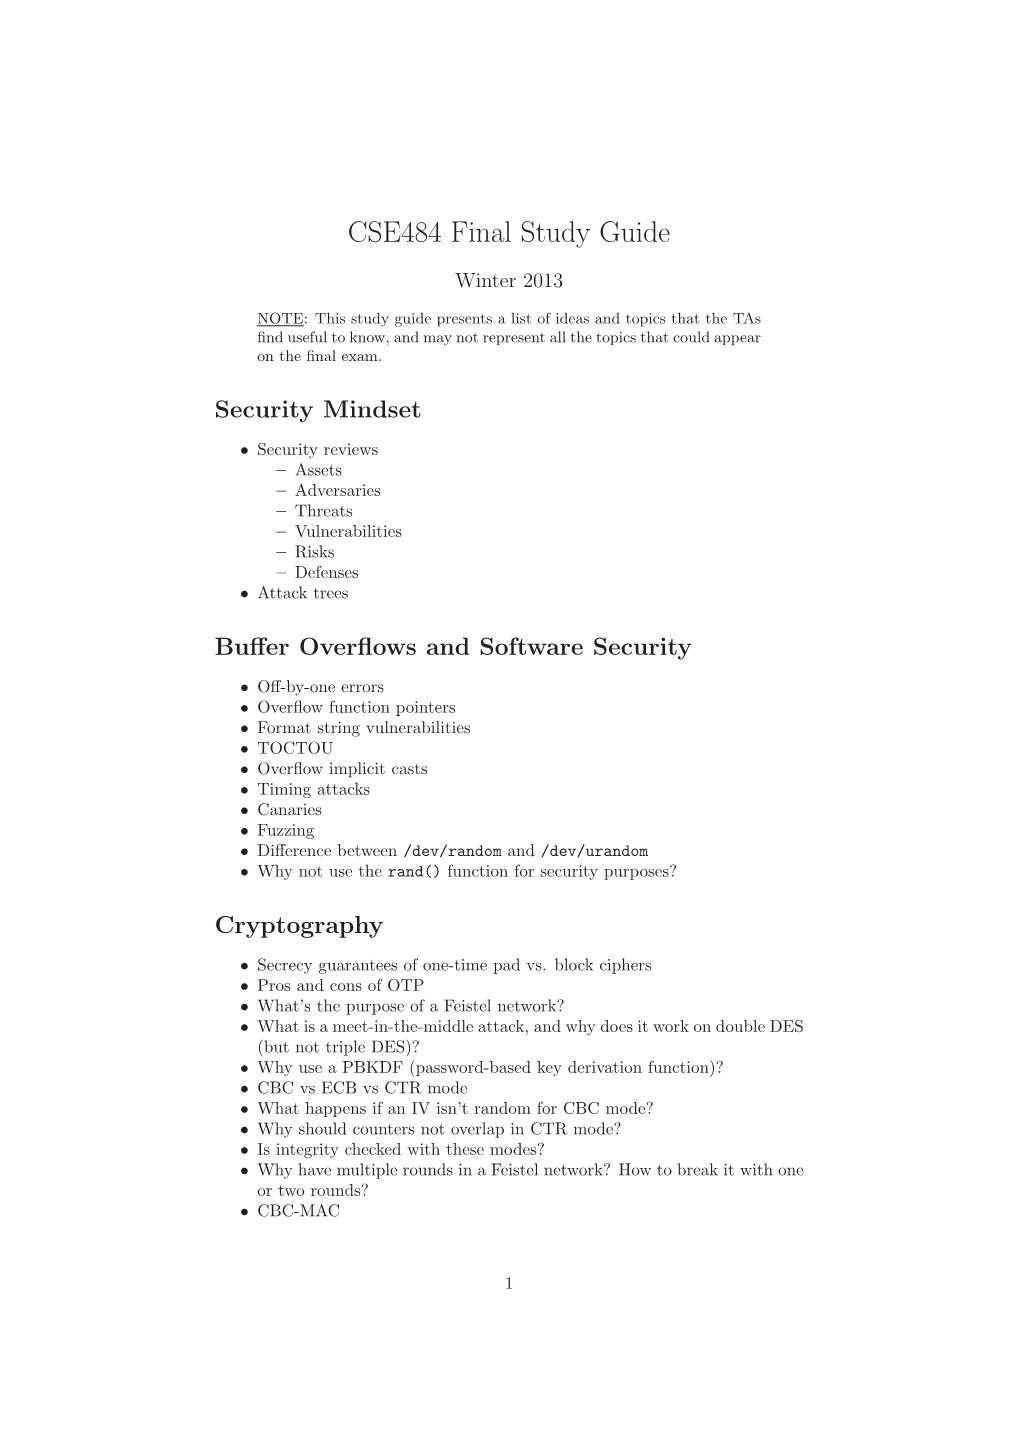 CSE484 Final Study Guide Winter 2013